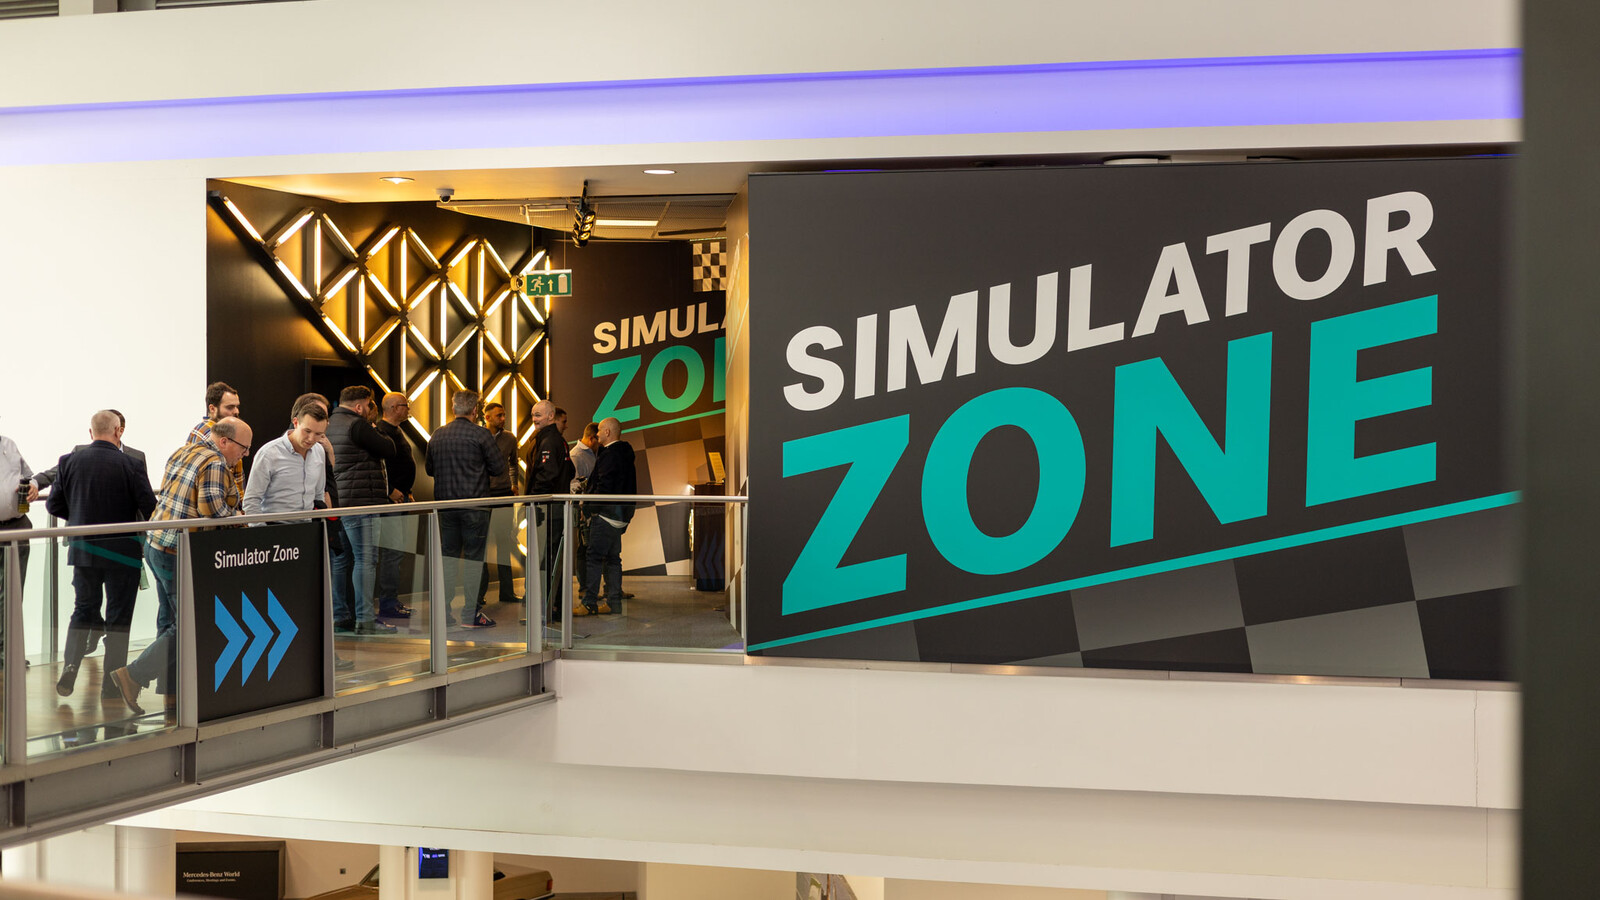 Simulator zone at Mercedes-Benz World